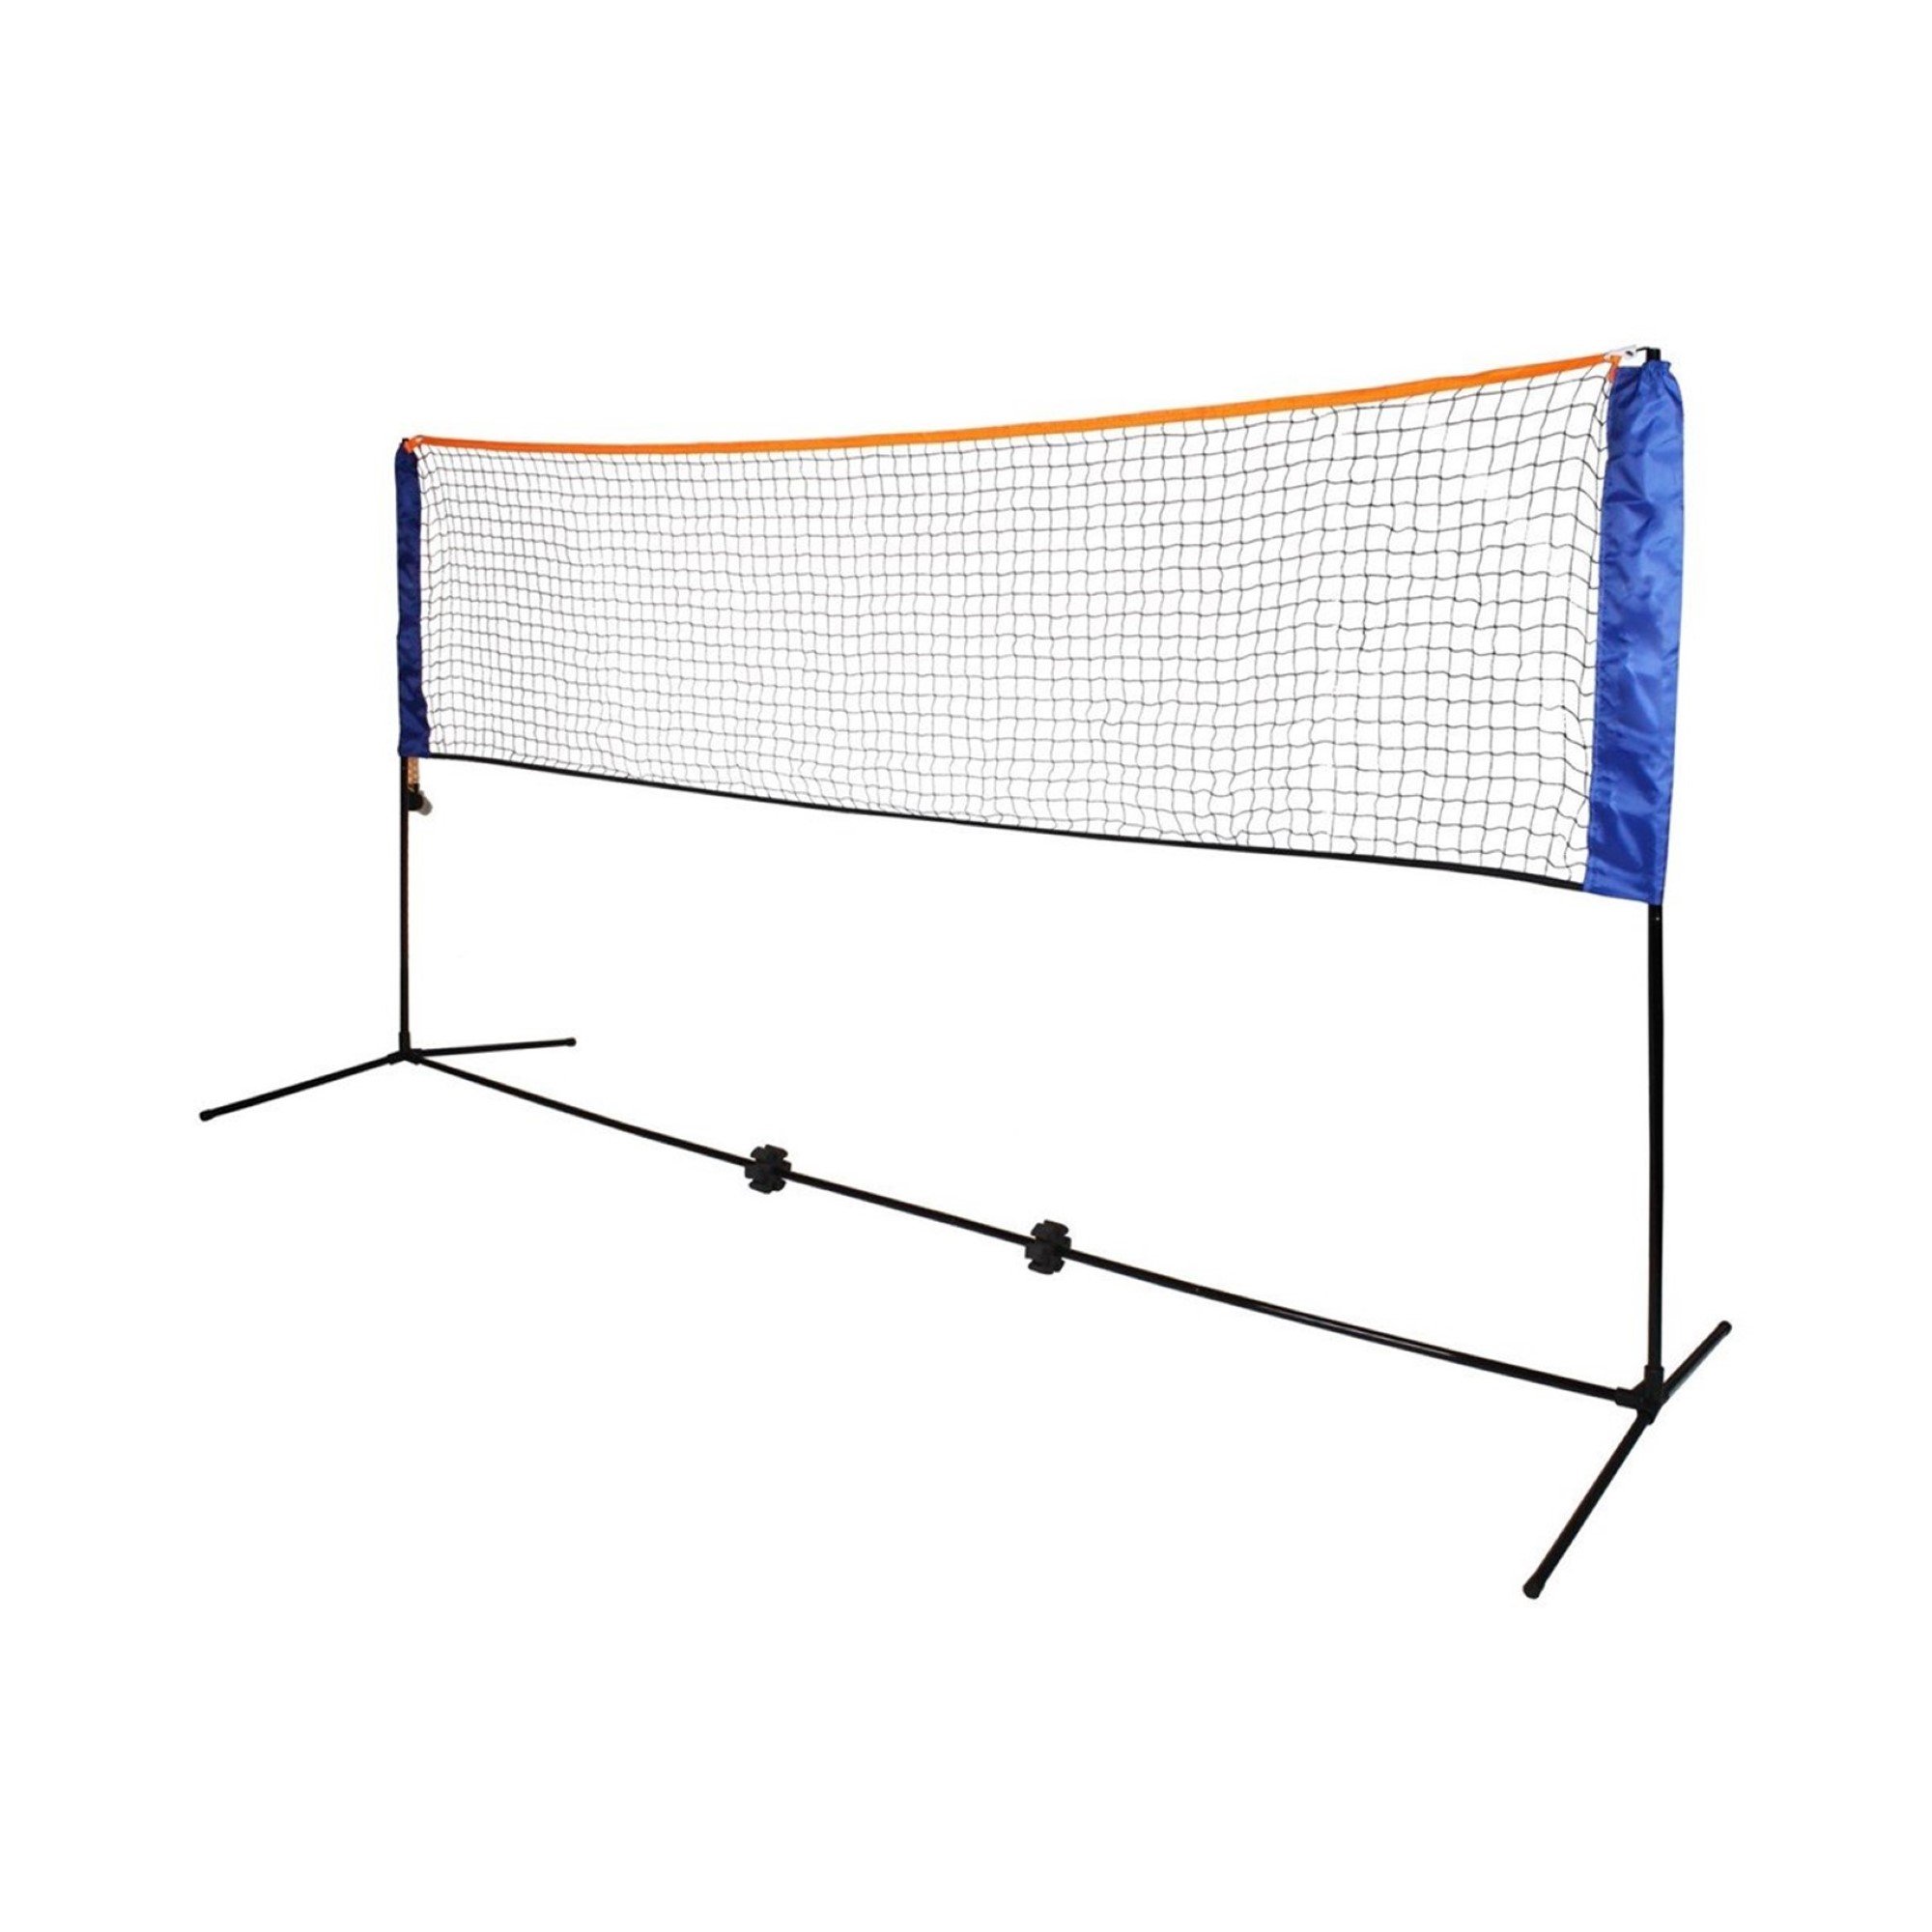 Large 5m Adjustable Foldable Badminton Tennis Volleyball Net